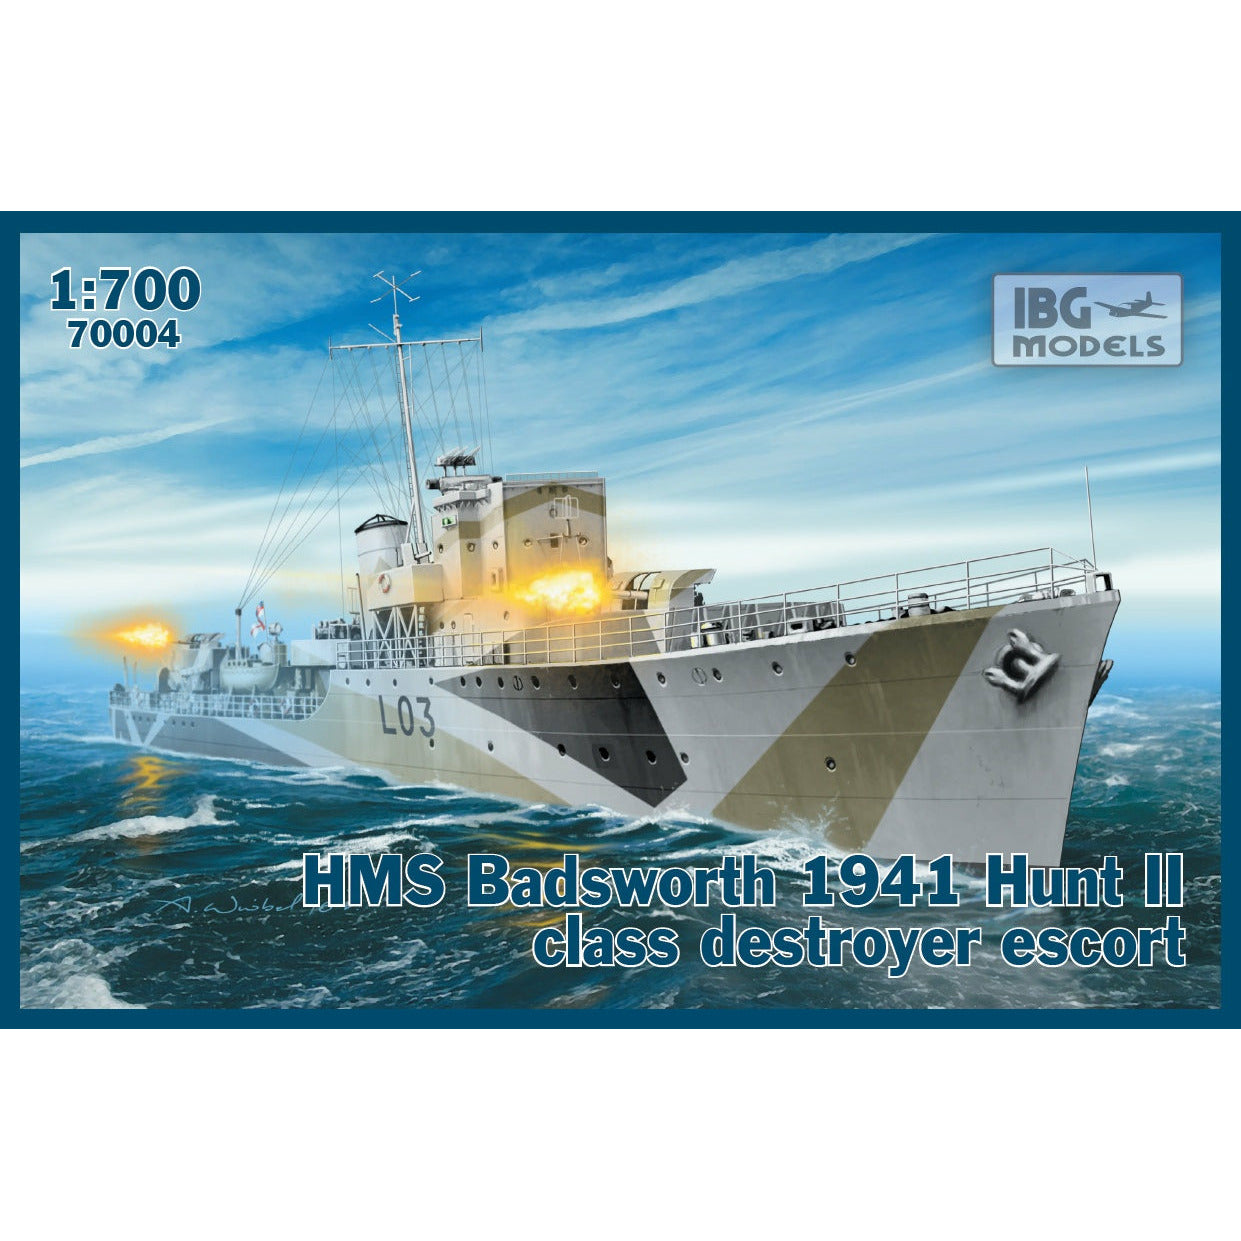 HMS Badsworth 1941 Hunt II Class 1/700 Model Ship Kit #70004 by IBG Models